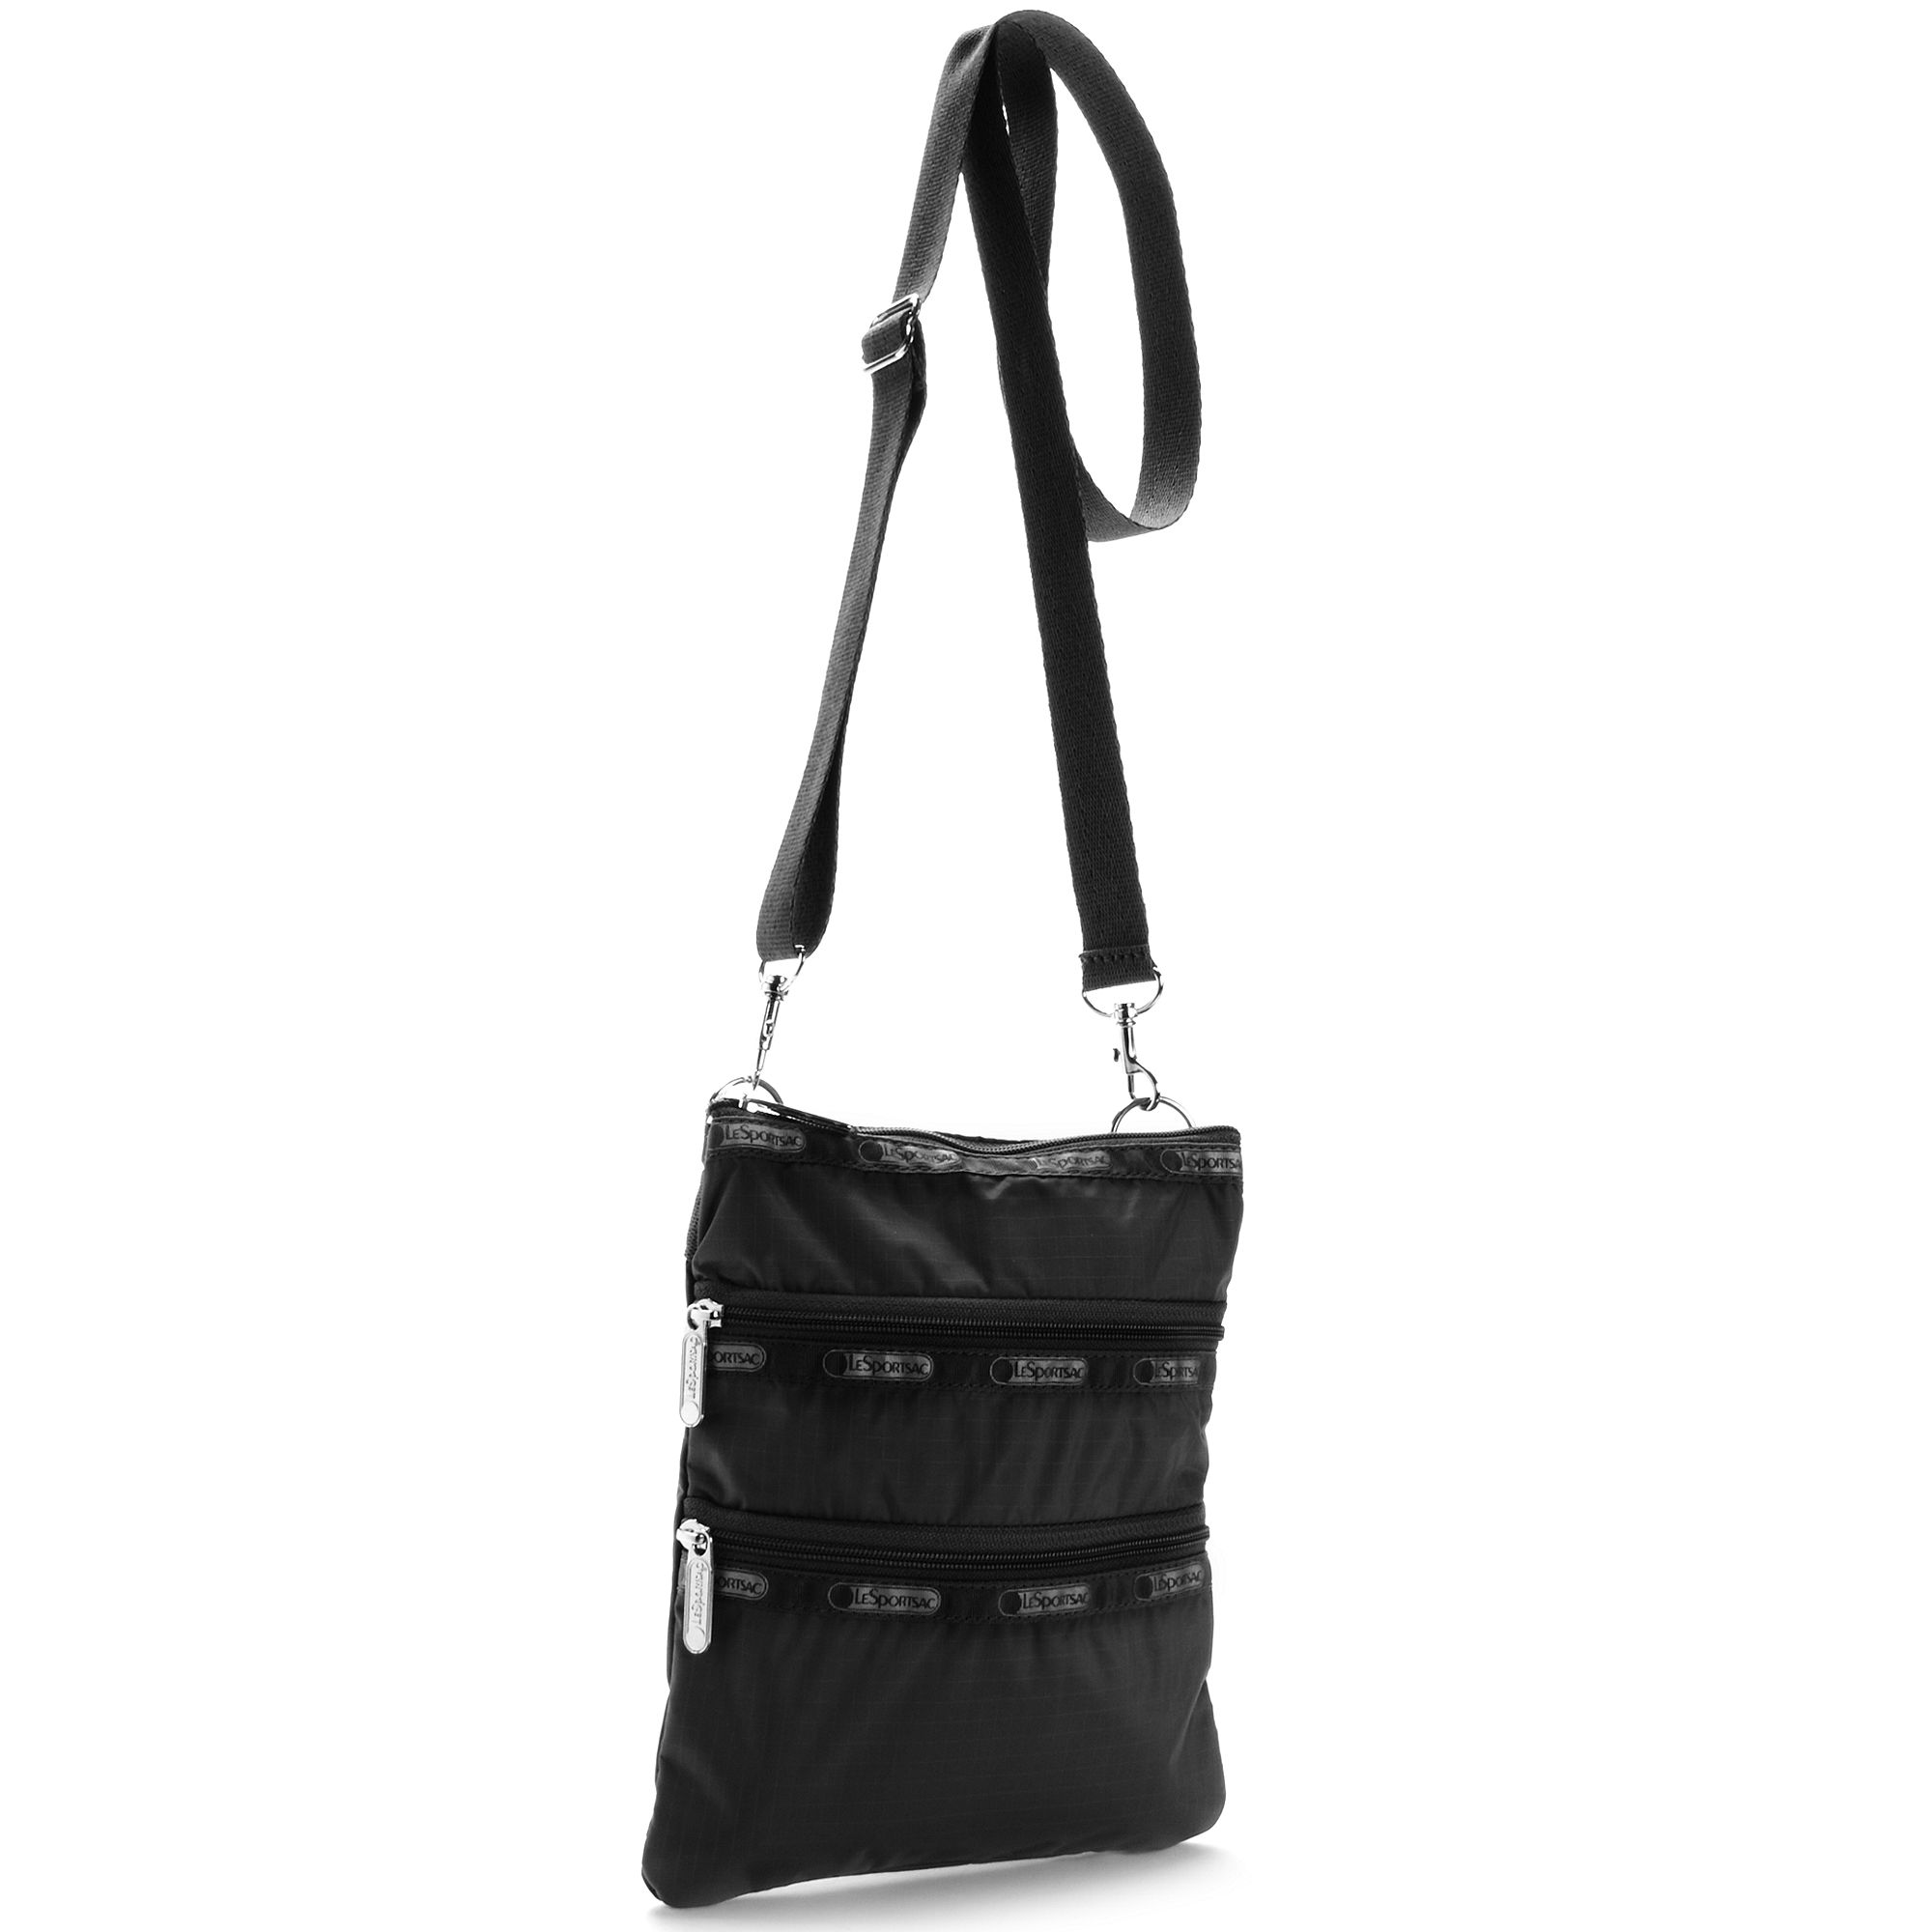 Lyst - Lesportsac Kasey Crossbody Bag in Black